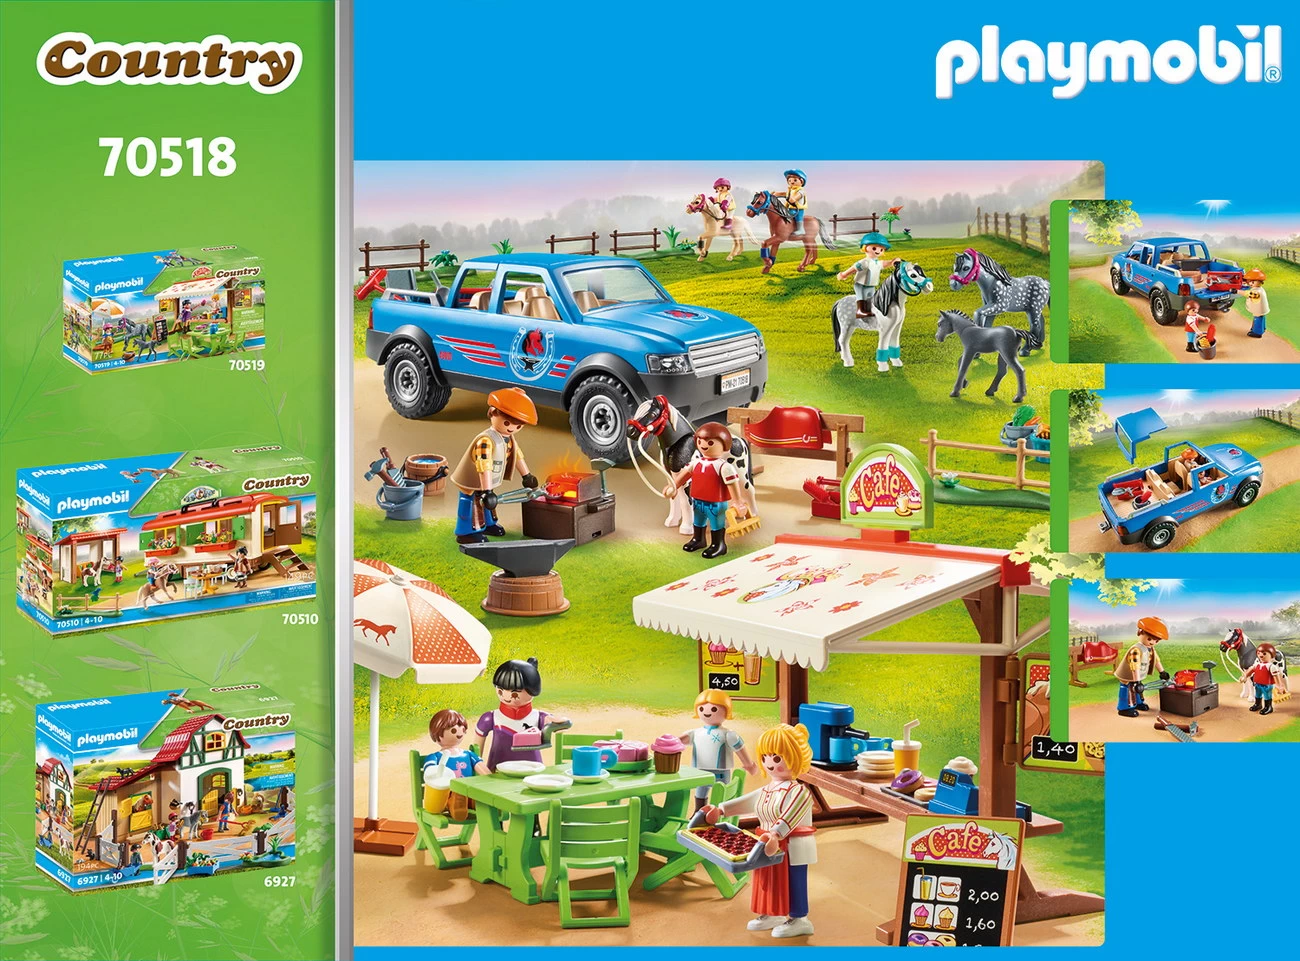 Playmobil 70518 - Mobiler Hufschmied (Country)